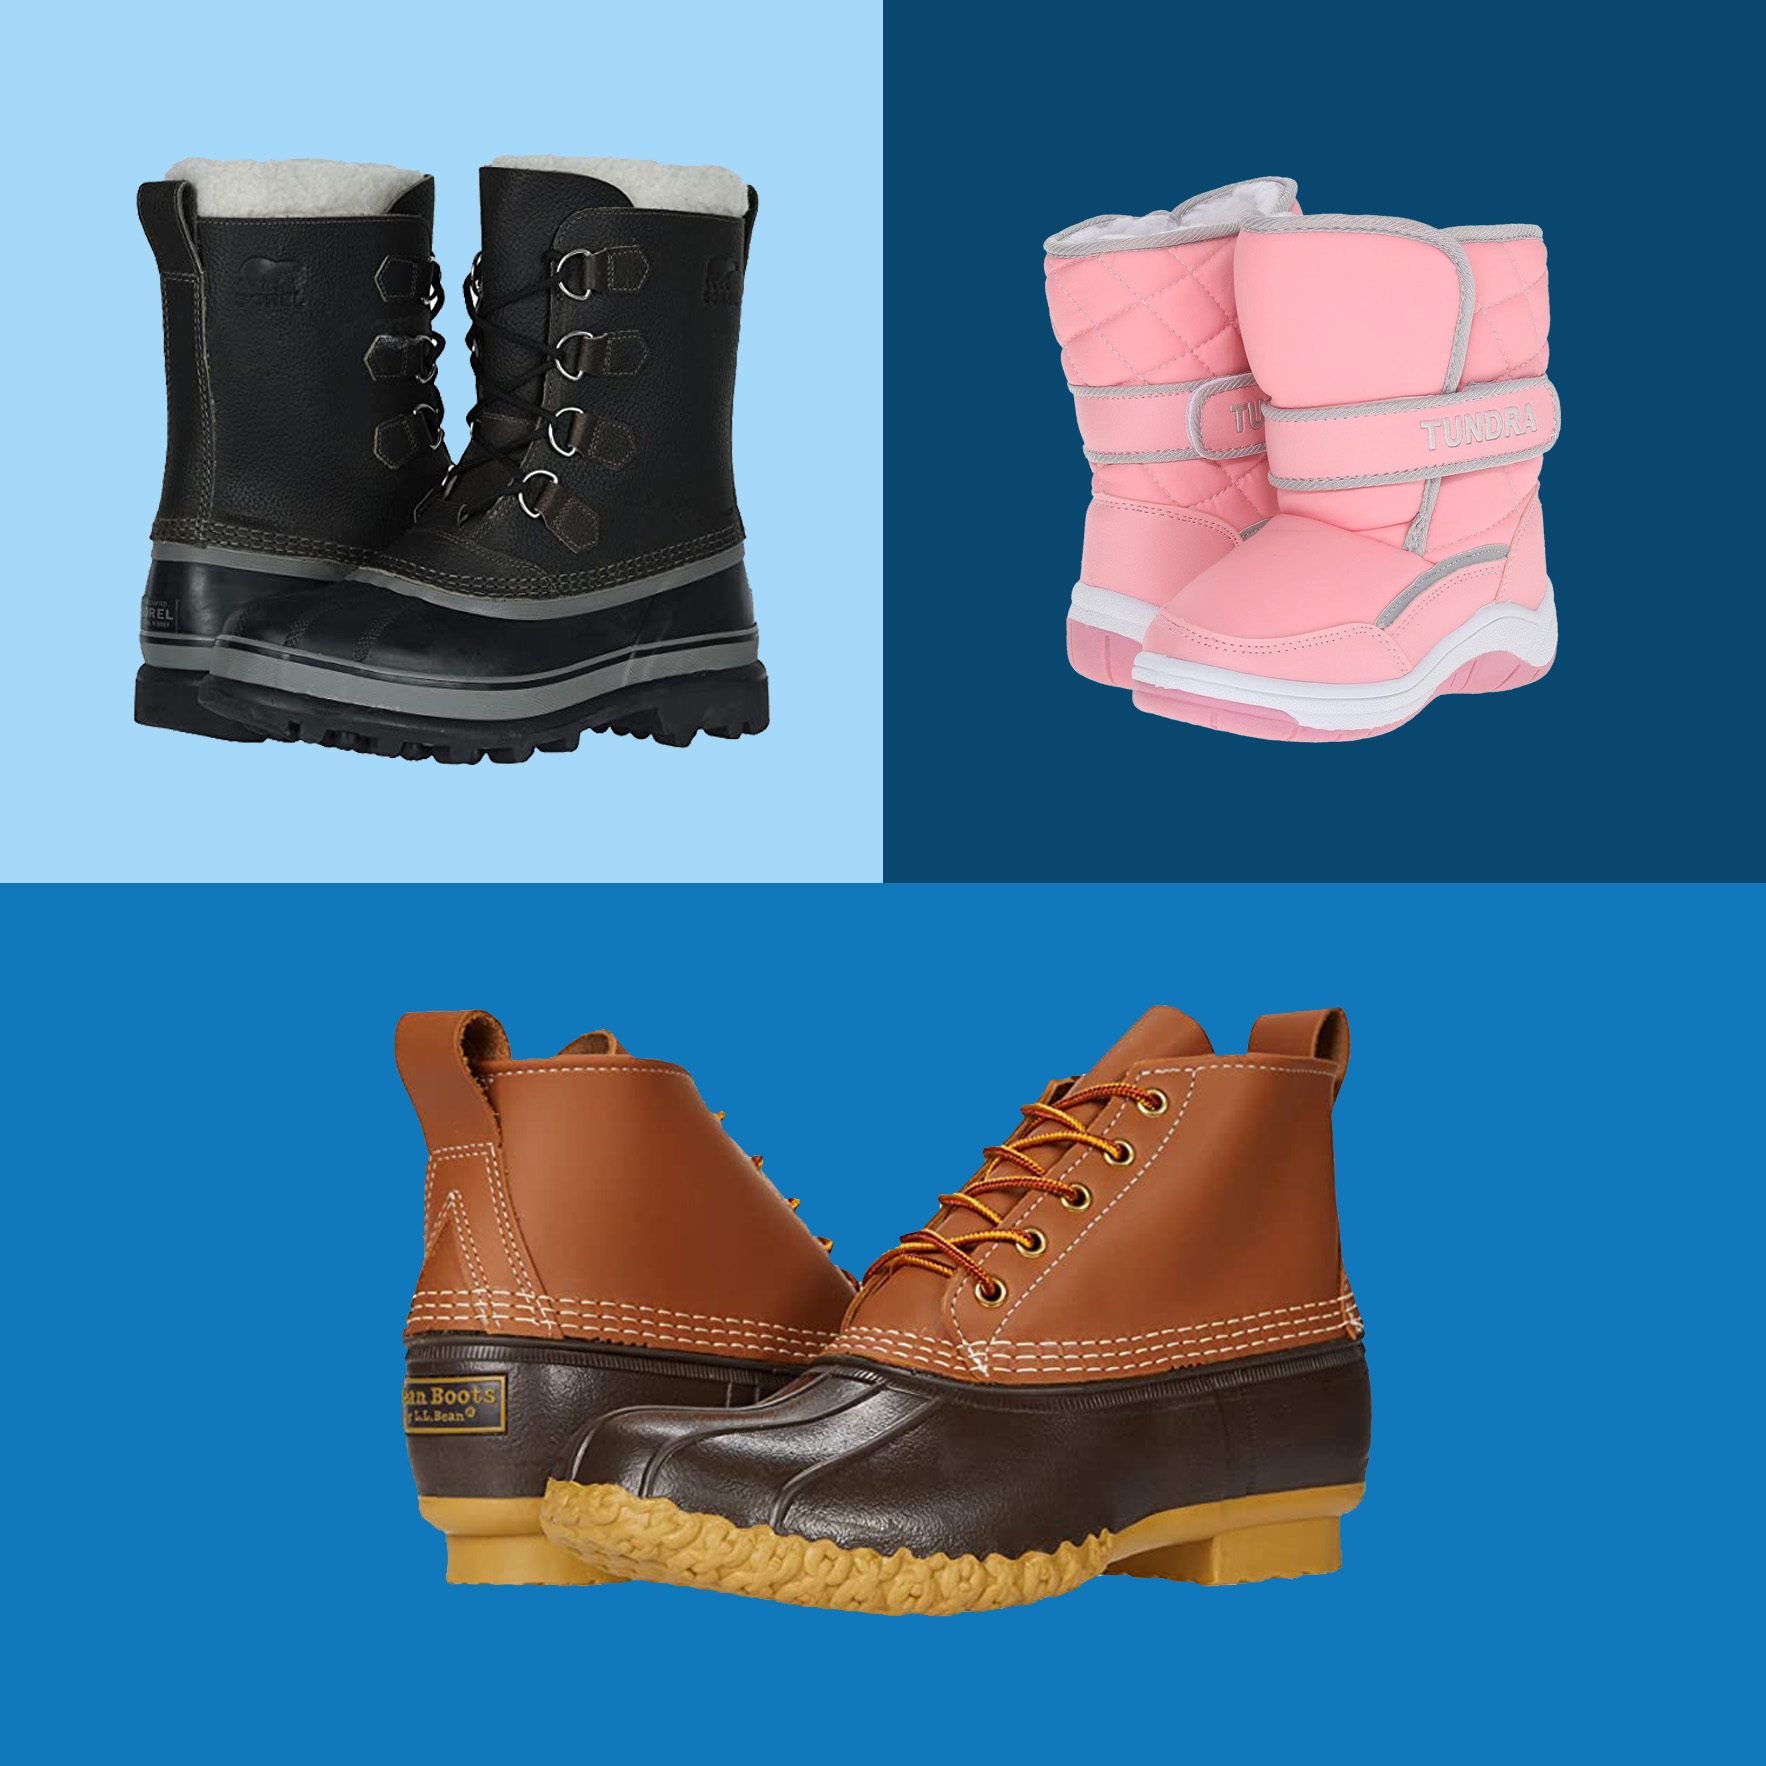 women's winter boots zappos